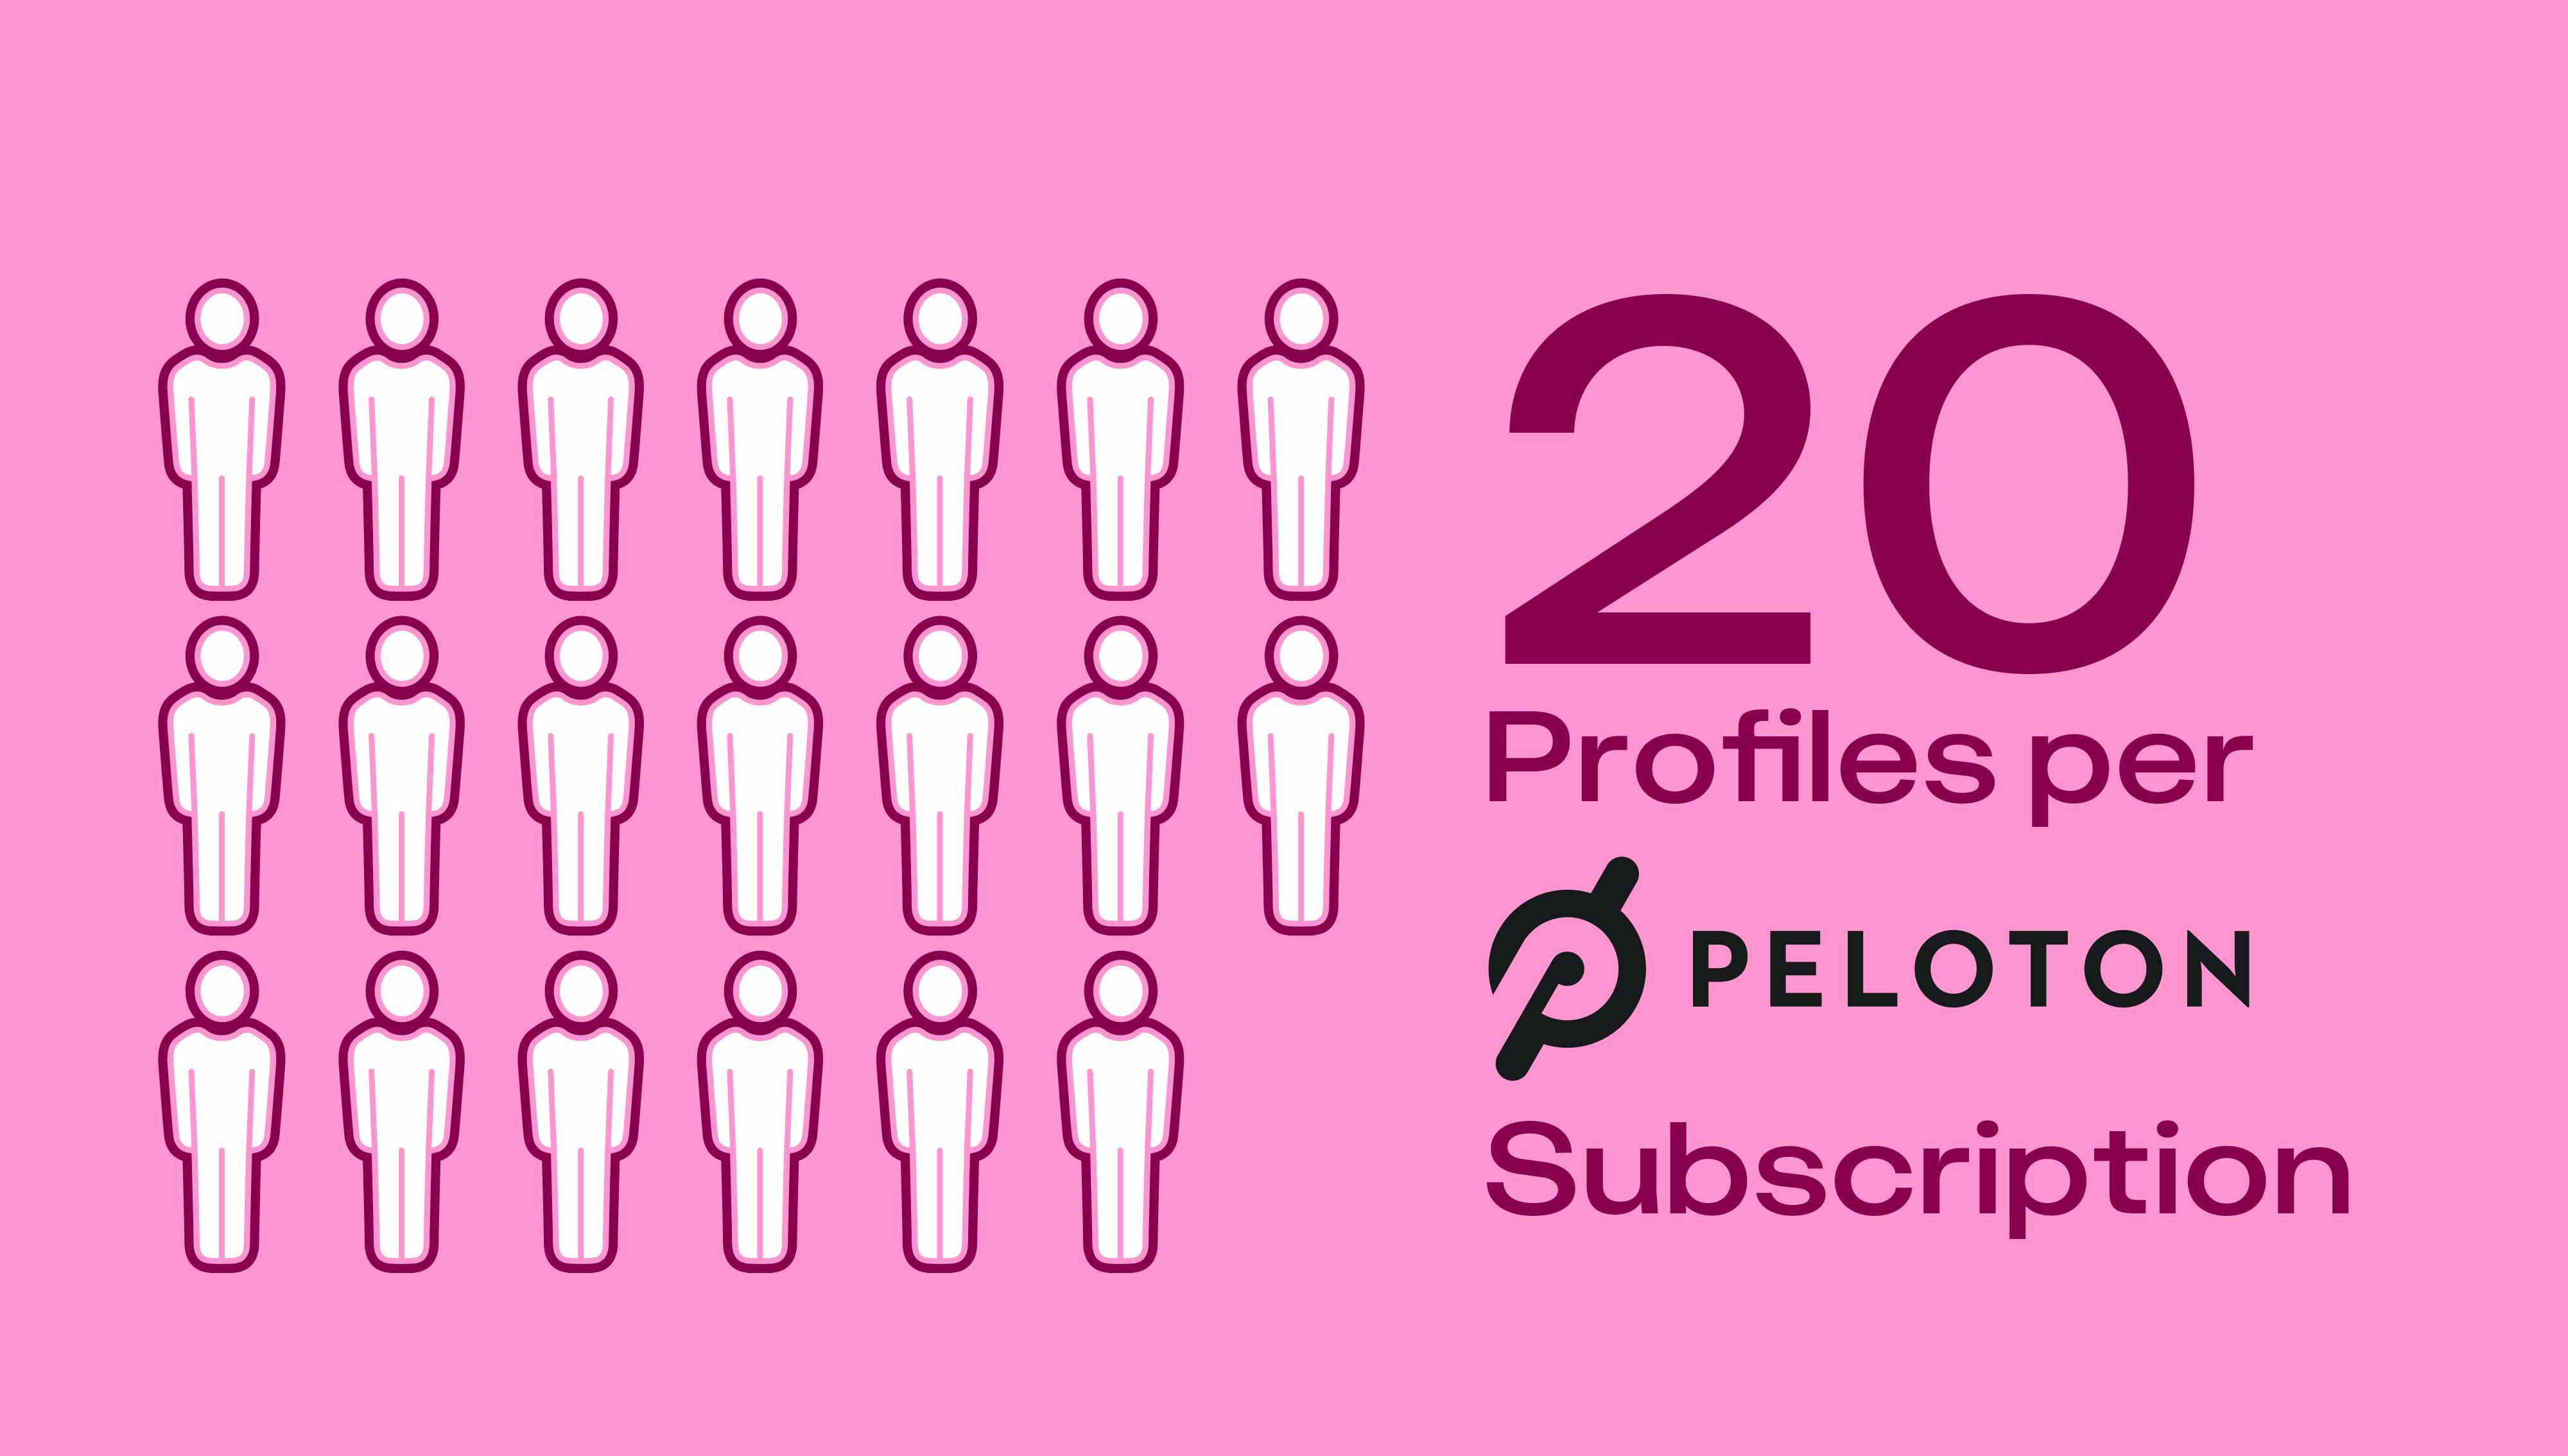 Peloton offers 20 profiles per subscription